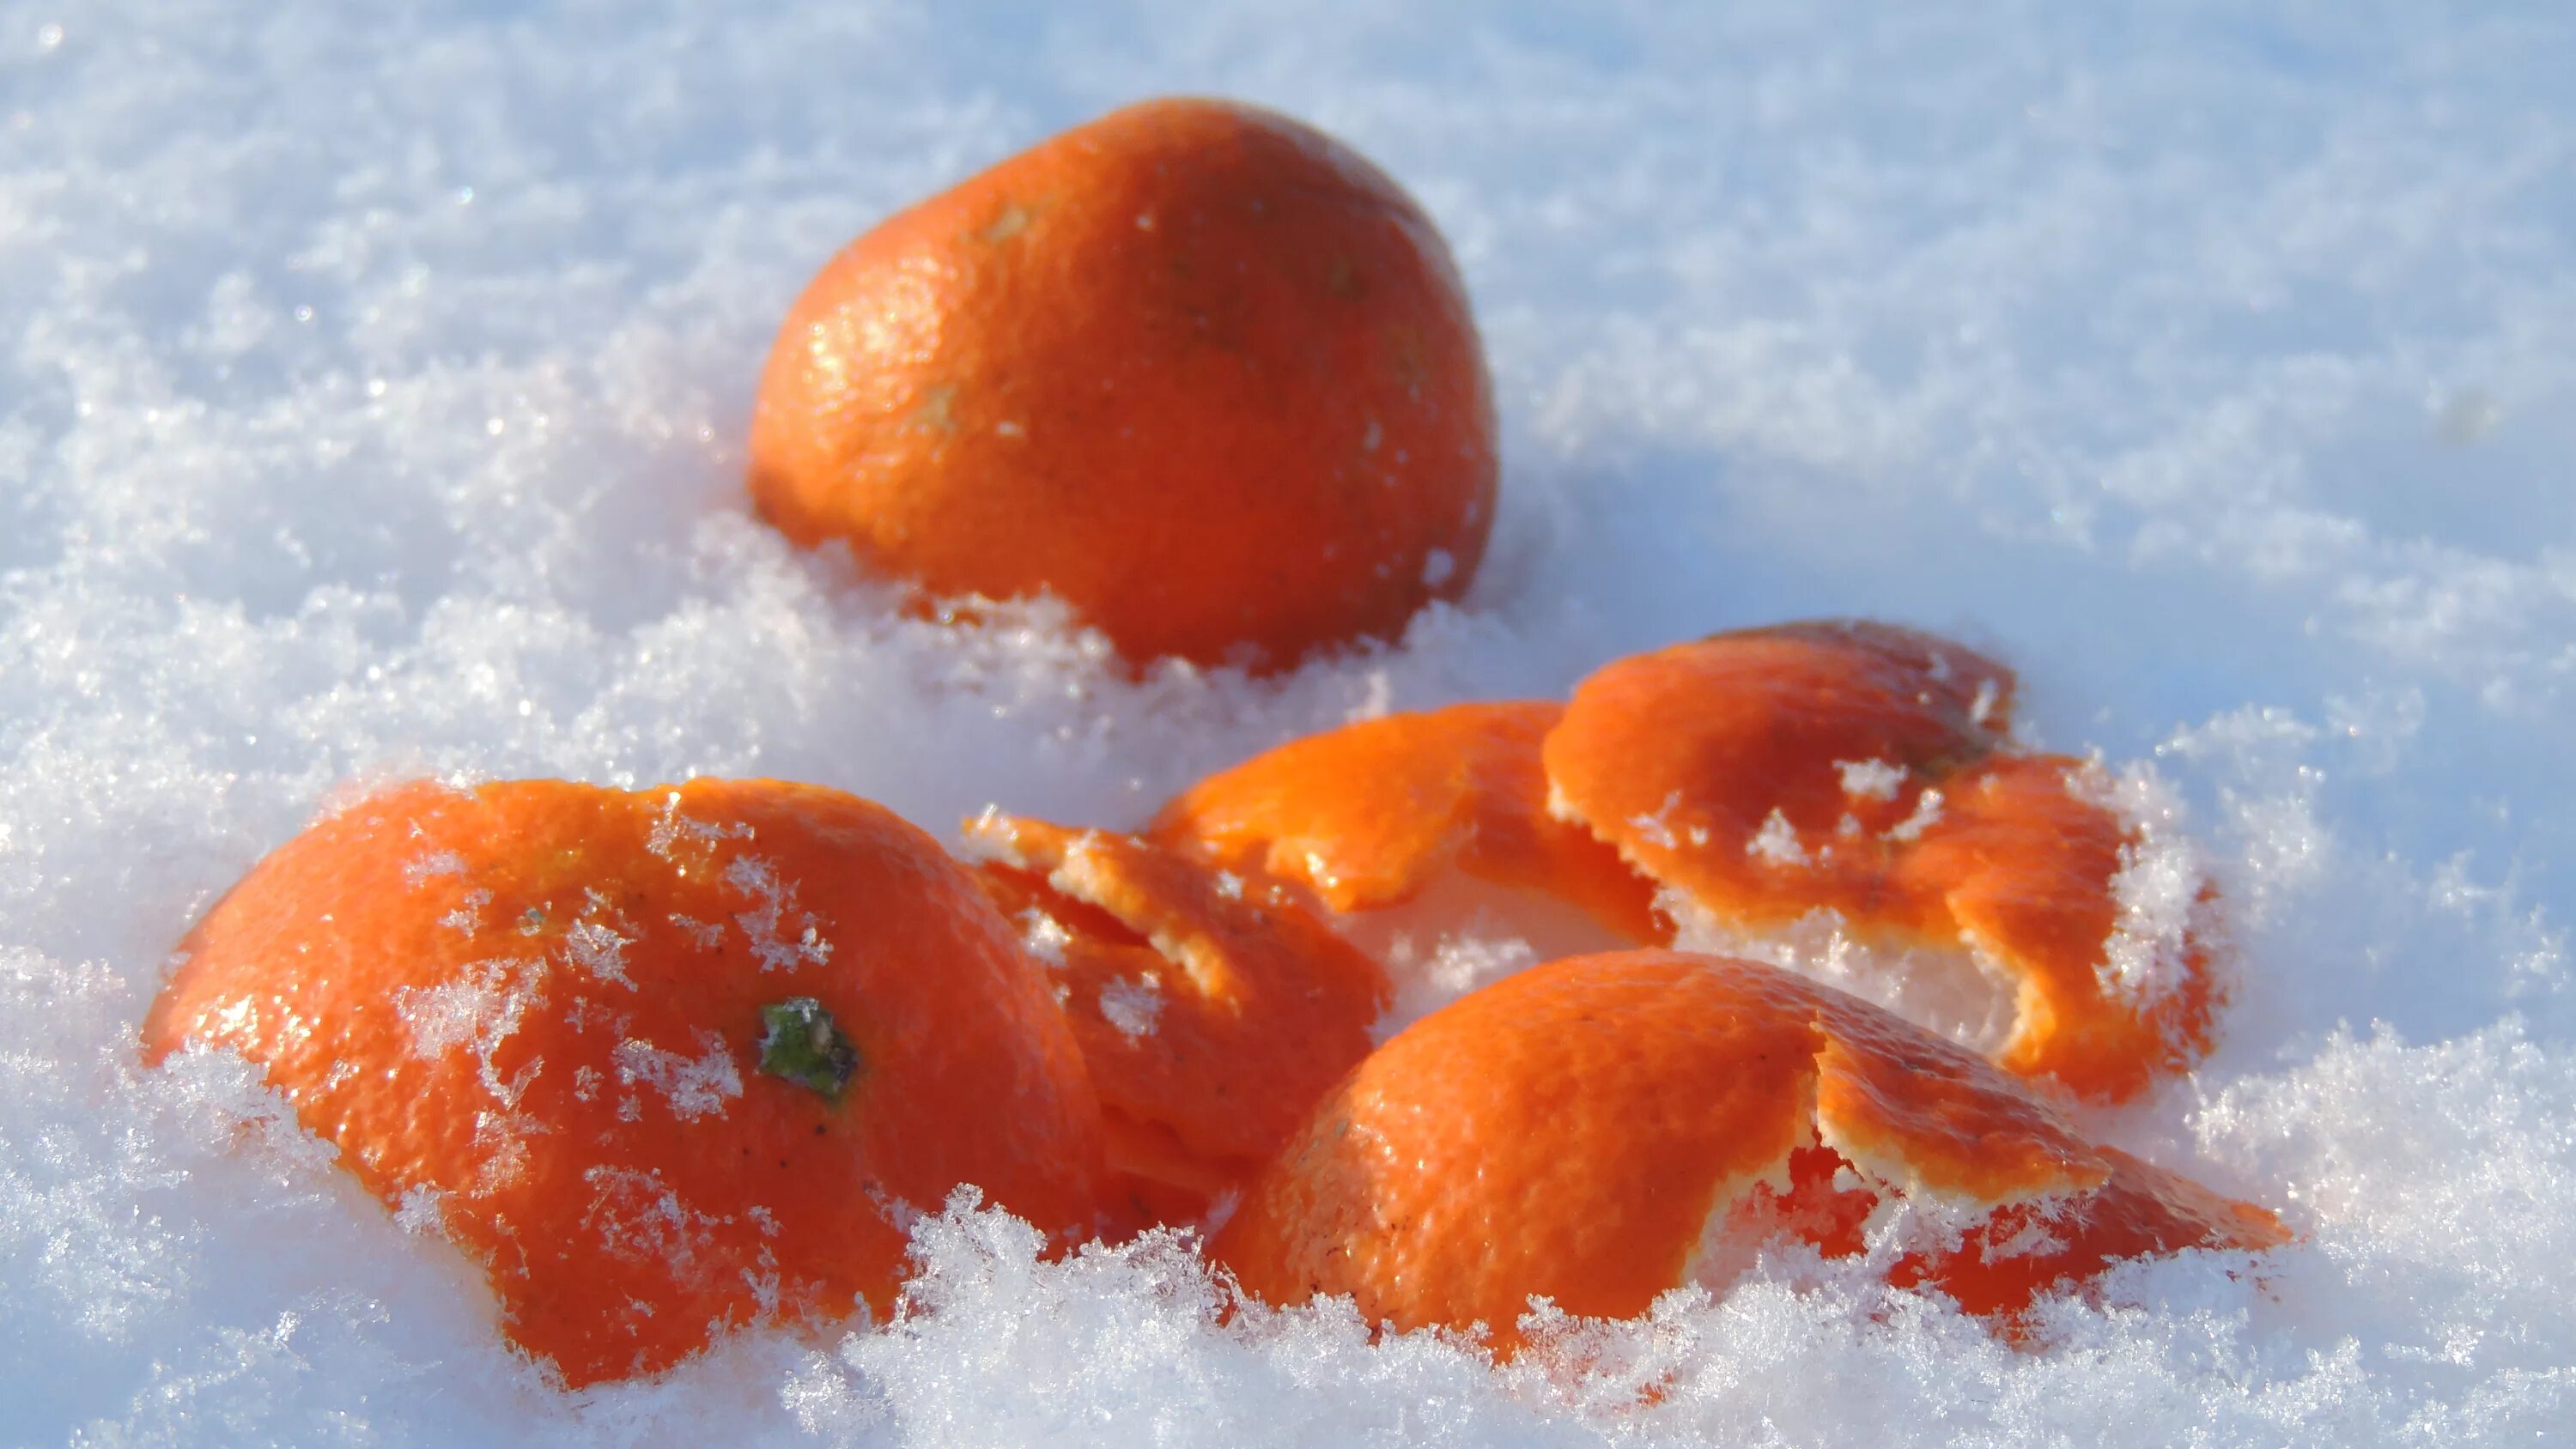 Море мандаринов. Мандарины на снегу. Апельсины на снегу. Мандарины новый год. Апельсины зимой.